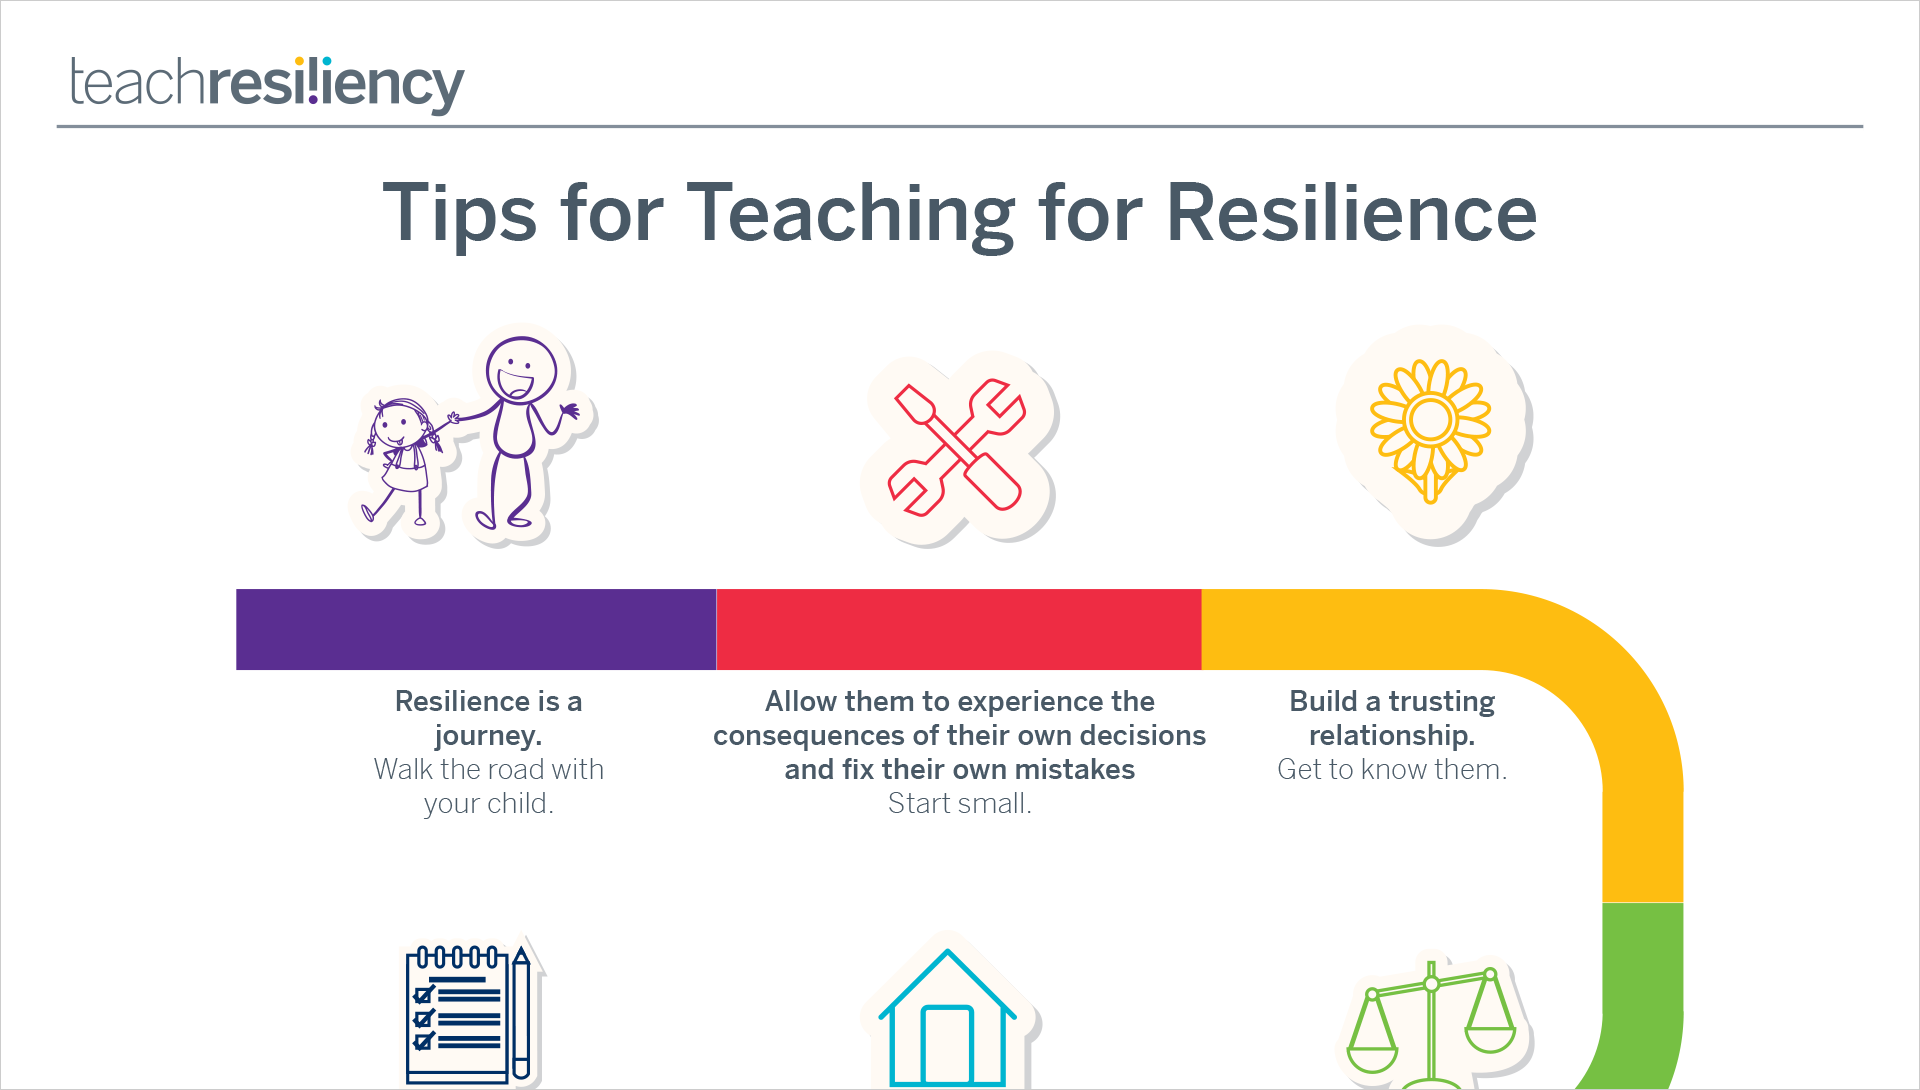 Tips for teaching resiliency